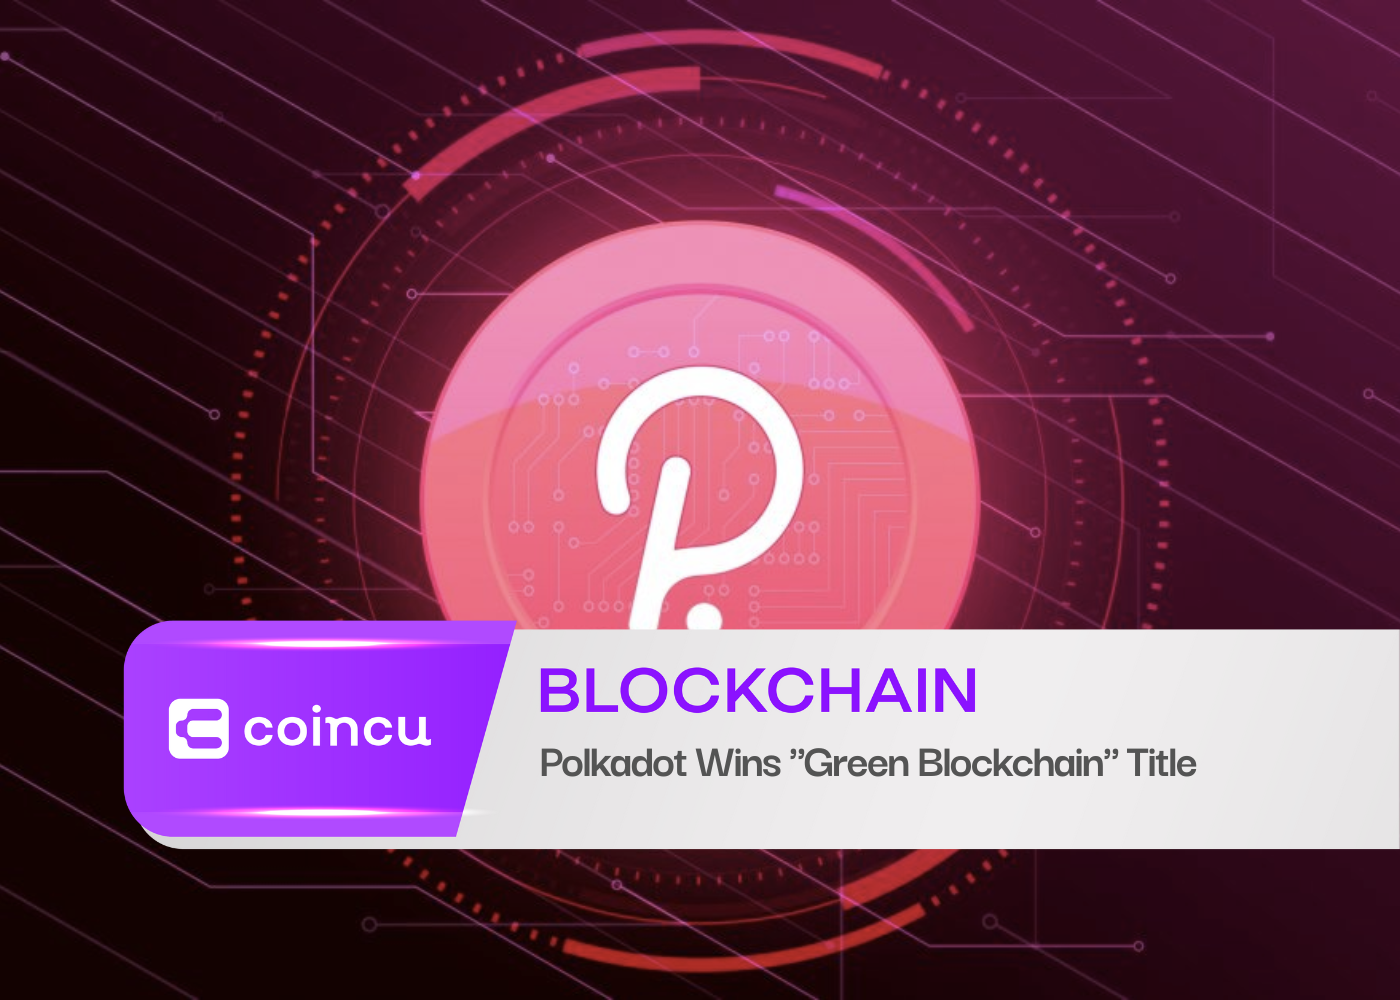 Polkadot Wins "Green Blockchain" Title